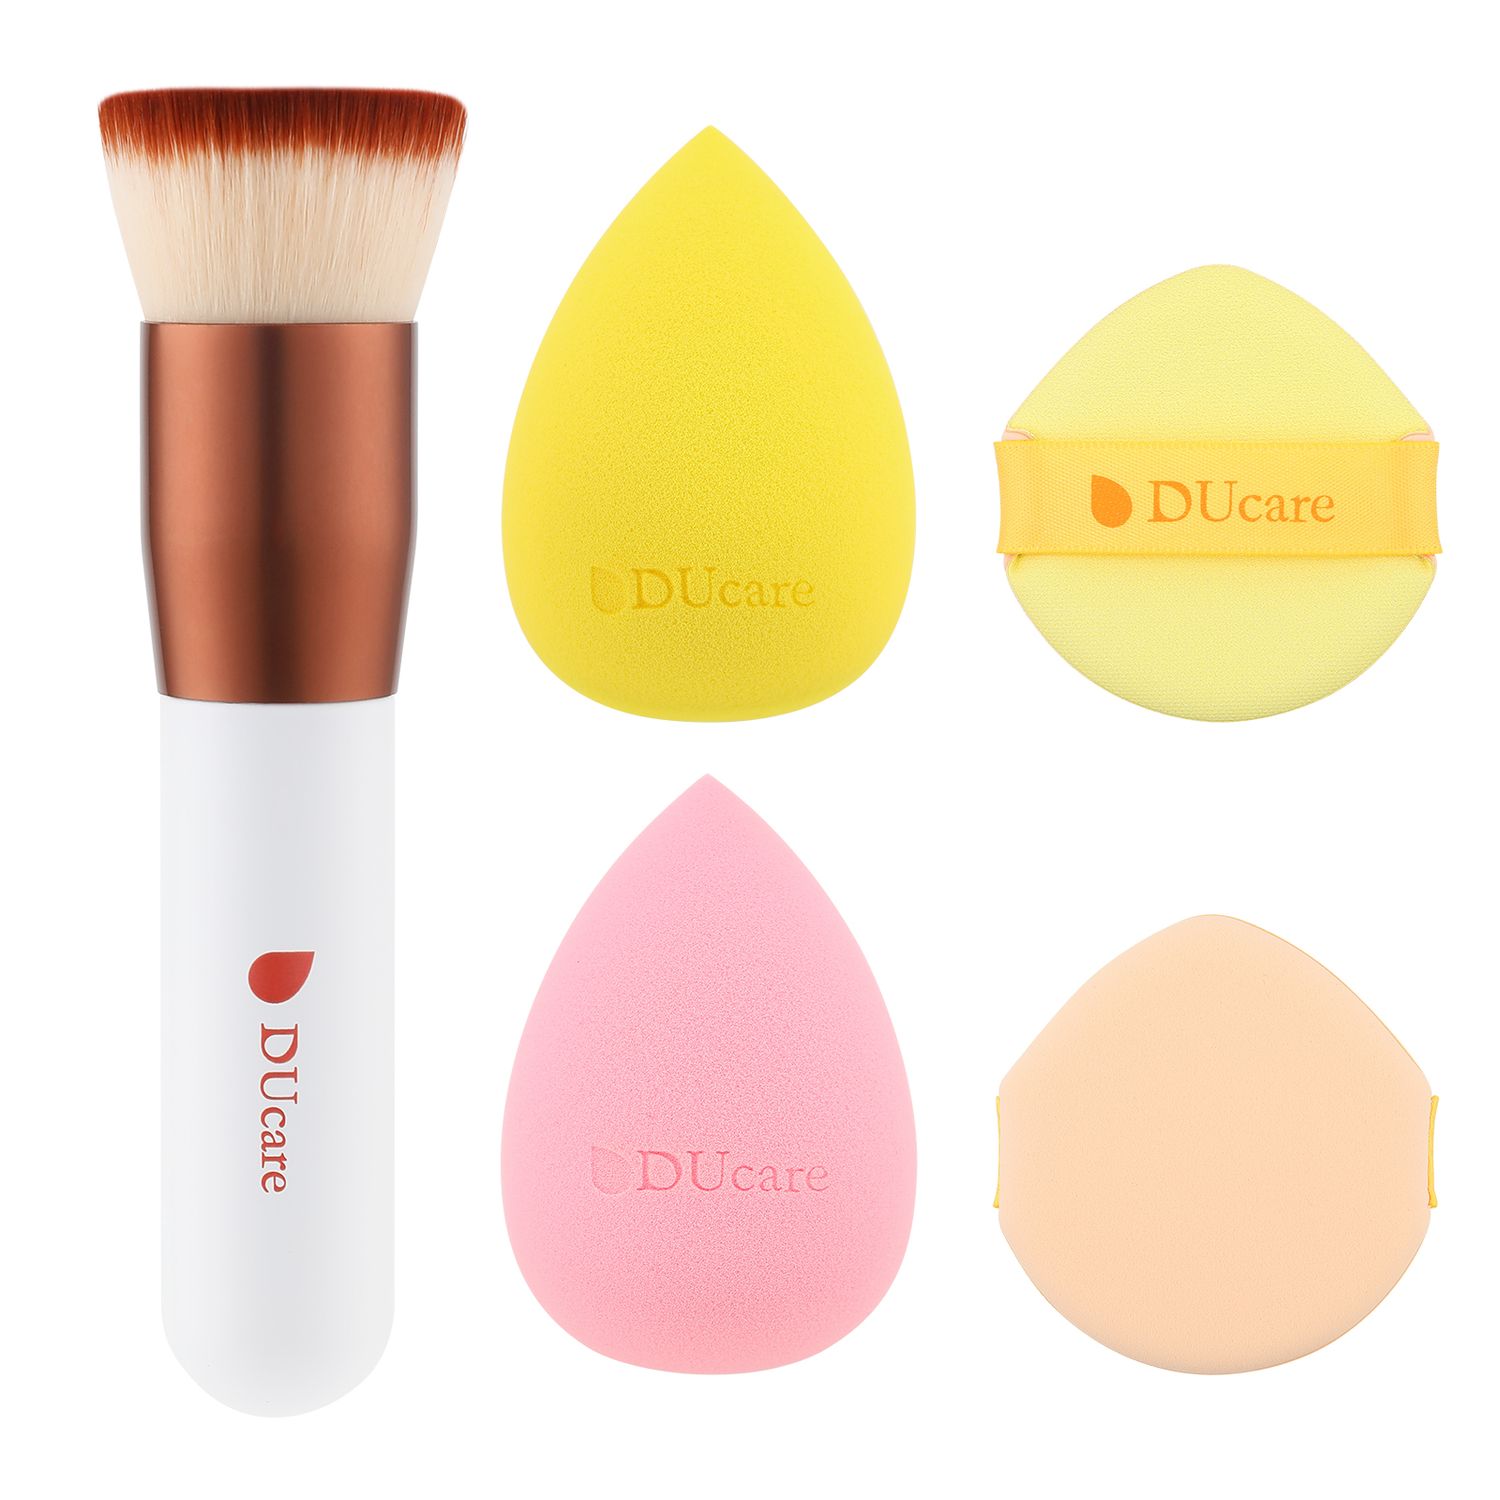 Foundation Brush+4 different shapes makeup blender sponge, create a clear and translucent base makeup